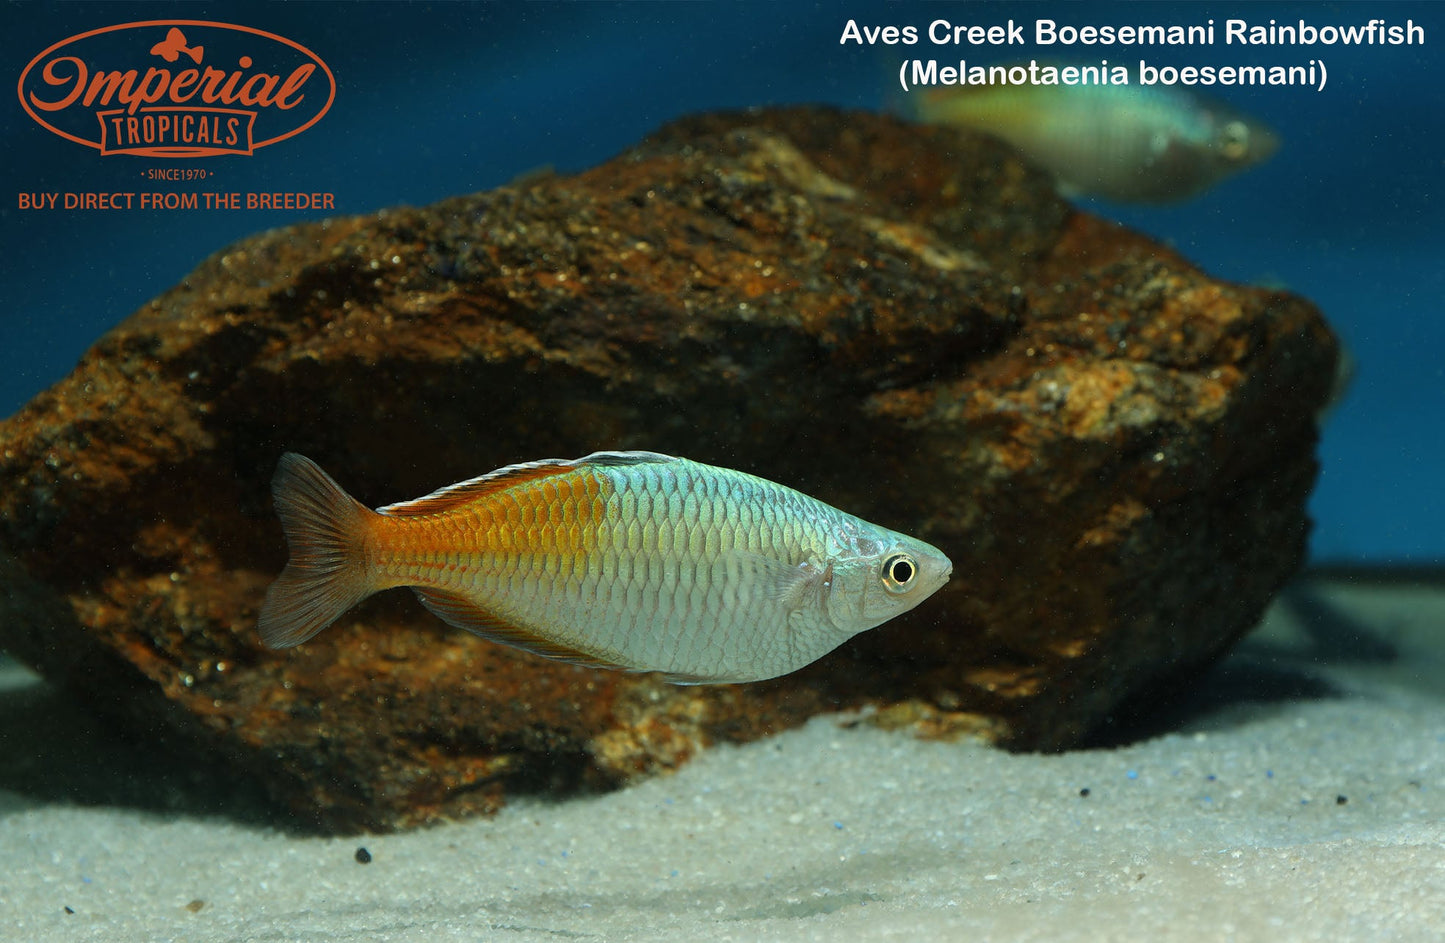 Aves Creek Boesemani Rainbowfish